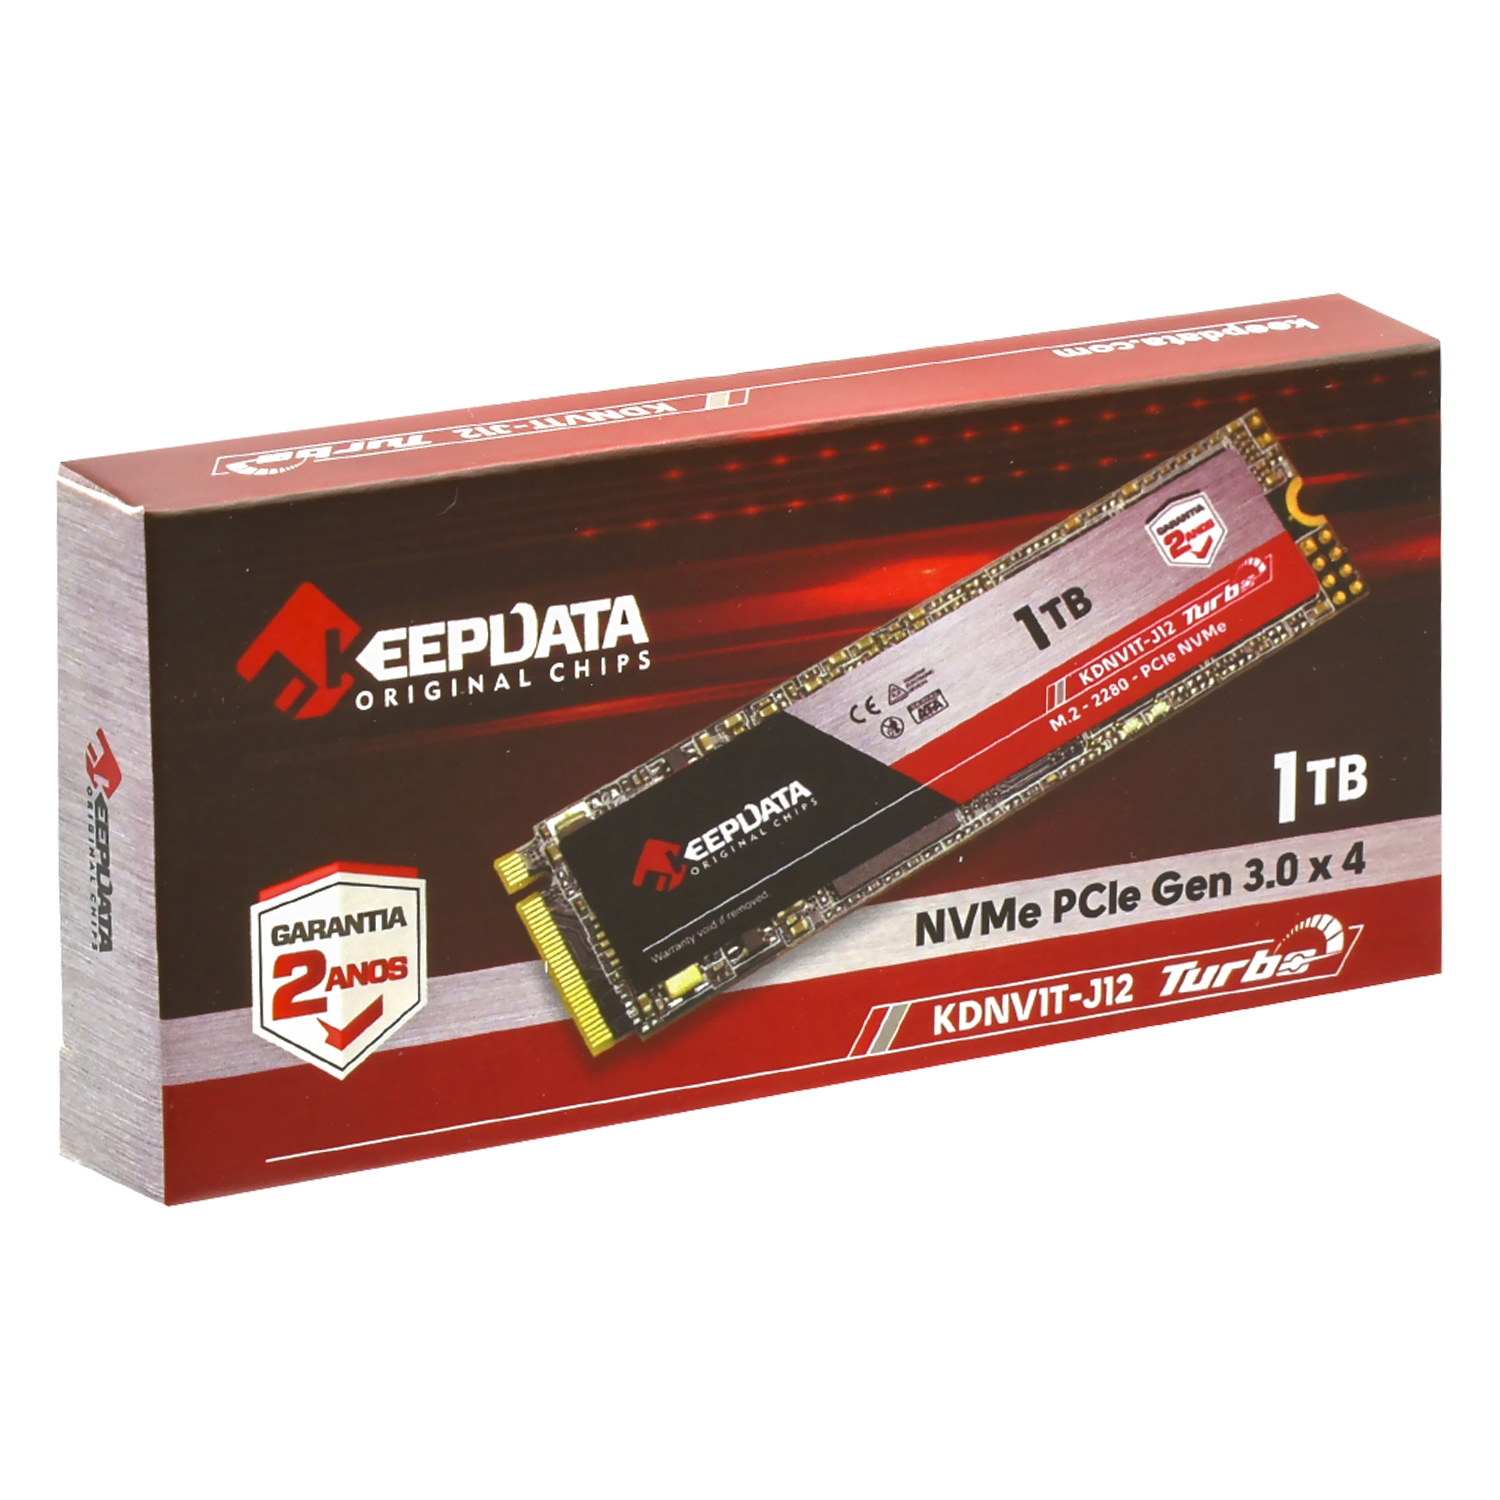 SSD M.2 Keepdata Turbo 1TB / NVMe PCIe Gen3 - (KDNV1T-J12)